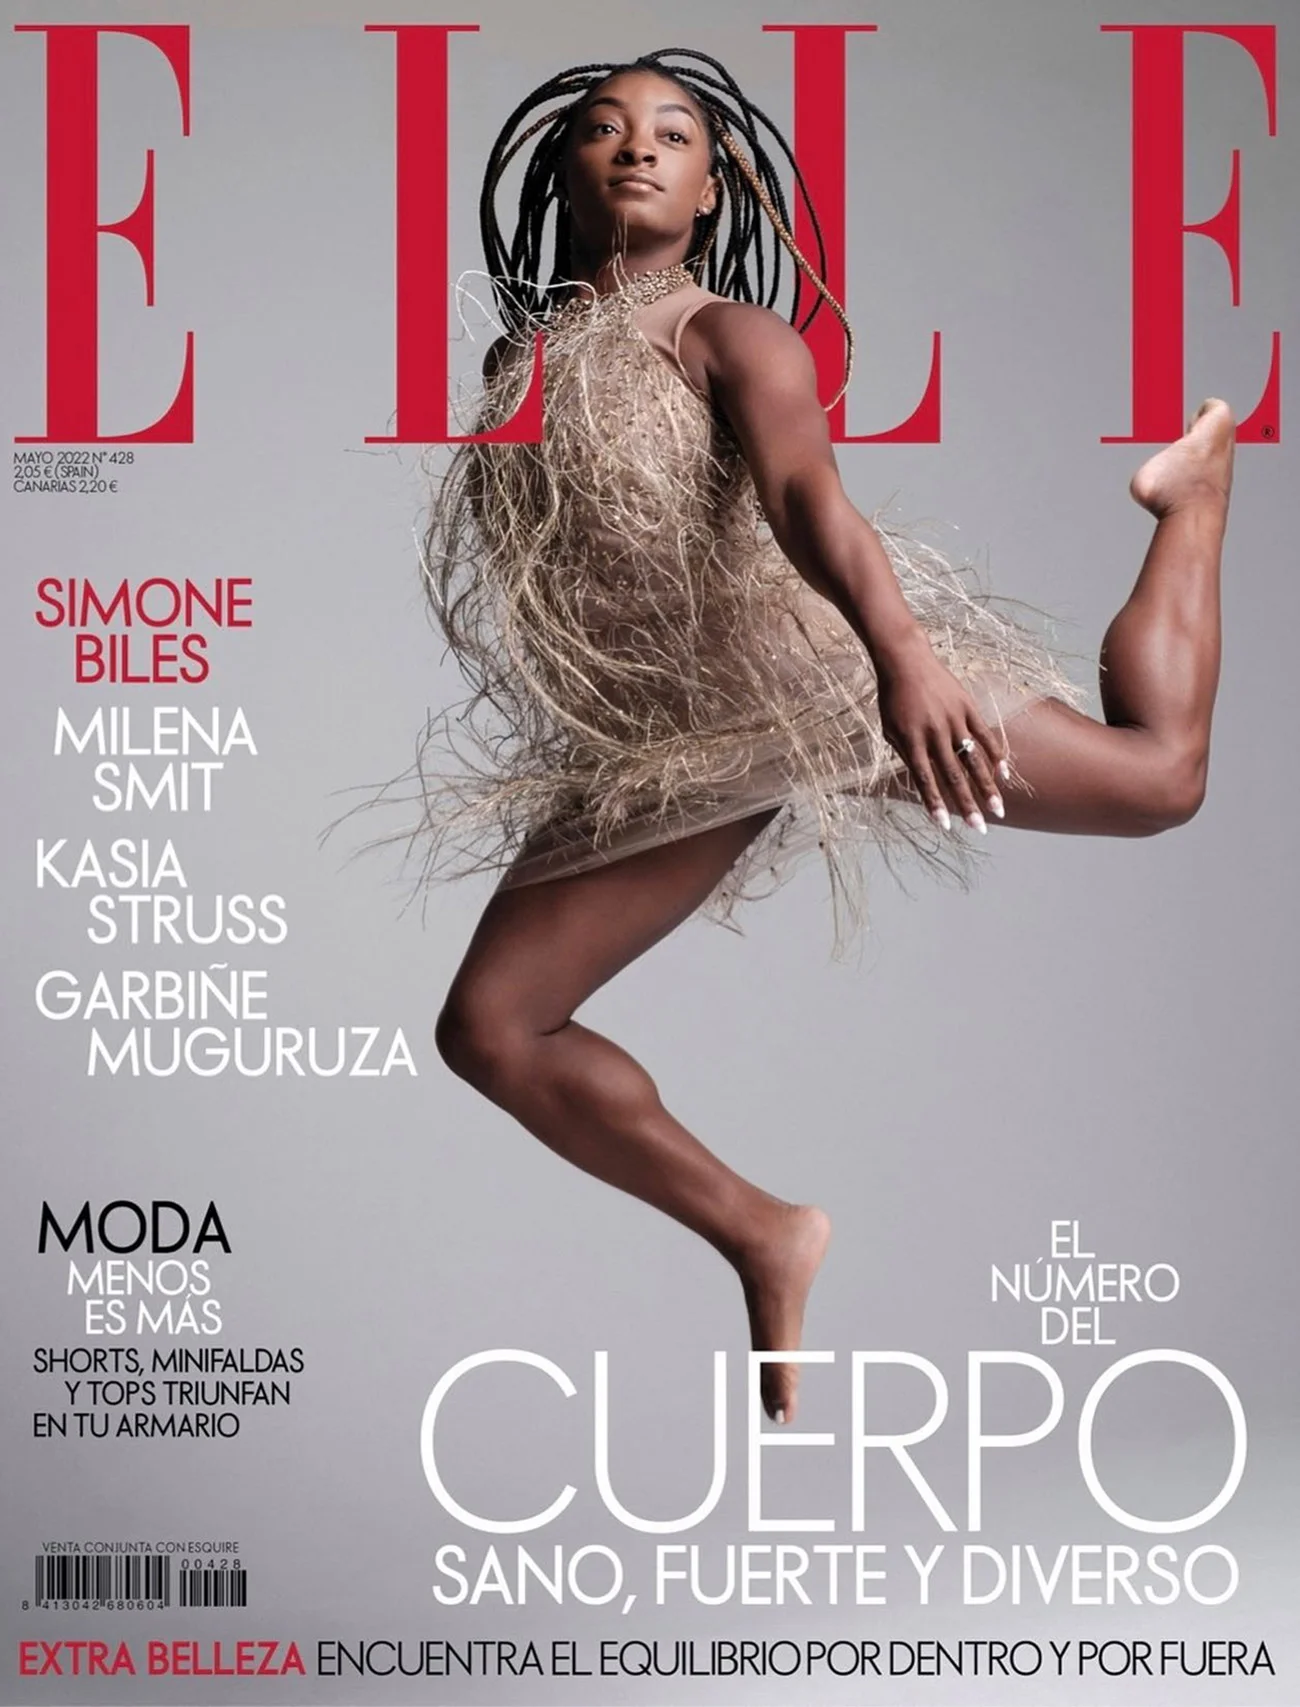 Simone Biles covers Elle Spain May 2022 by Juankr